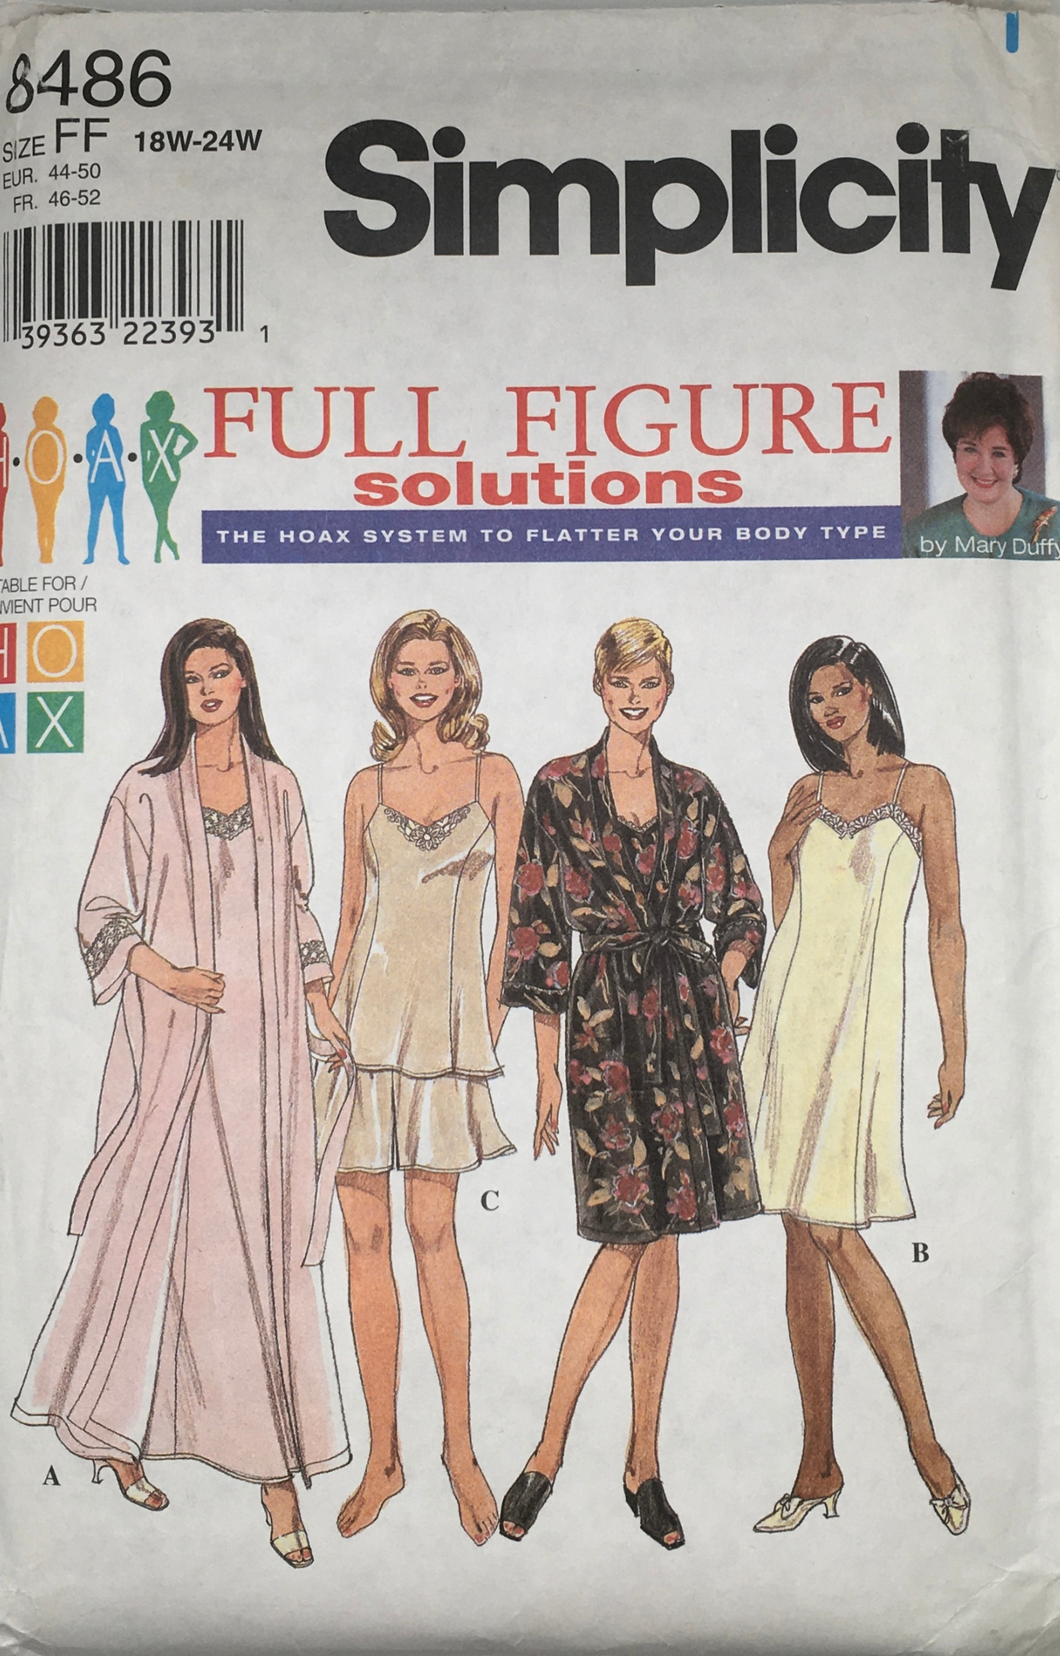 1998 Vintage Sewing Pattern: Simplicity 8486